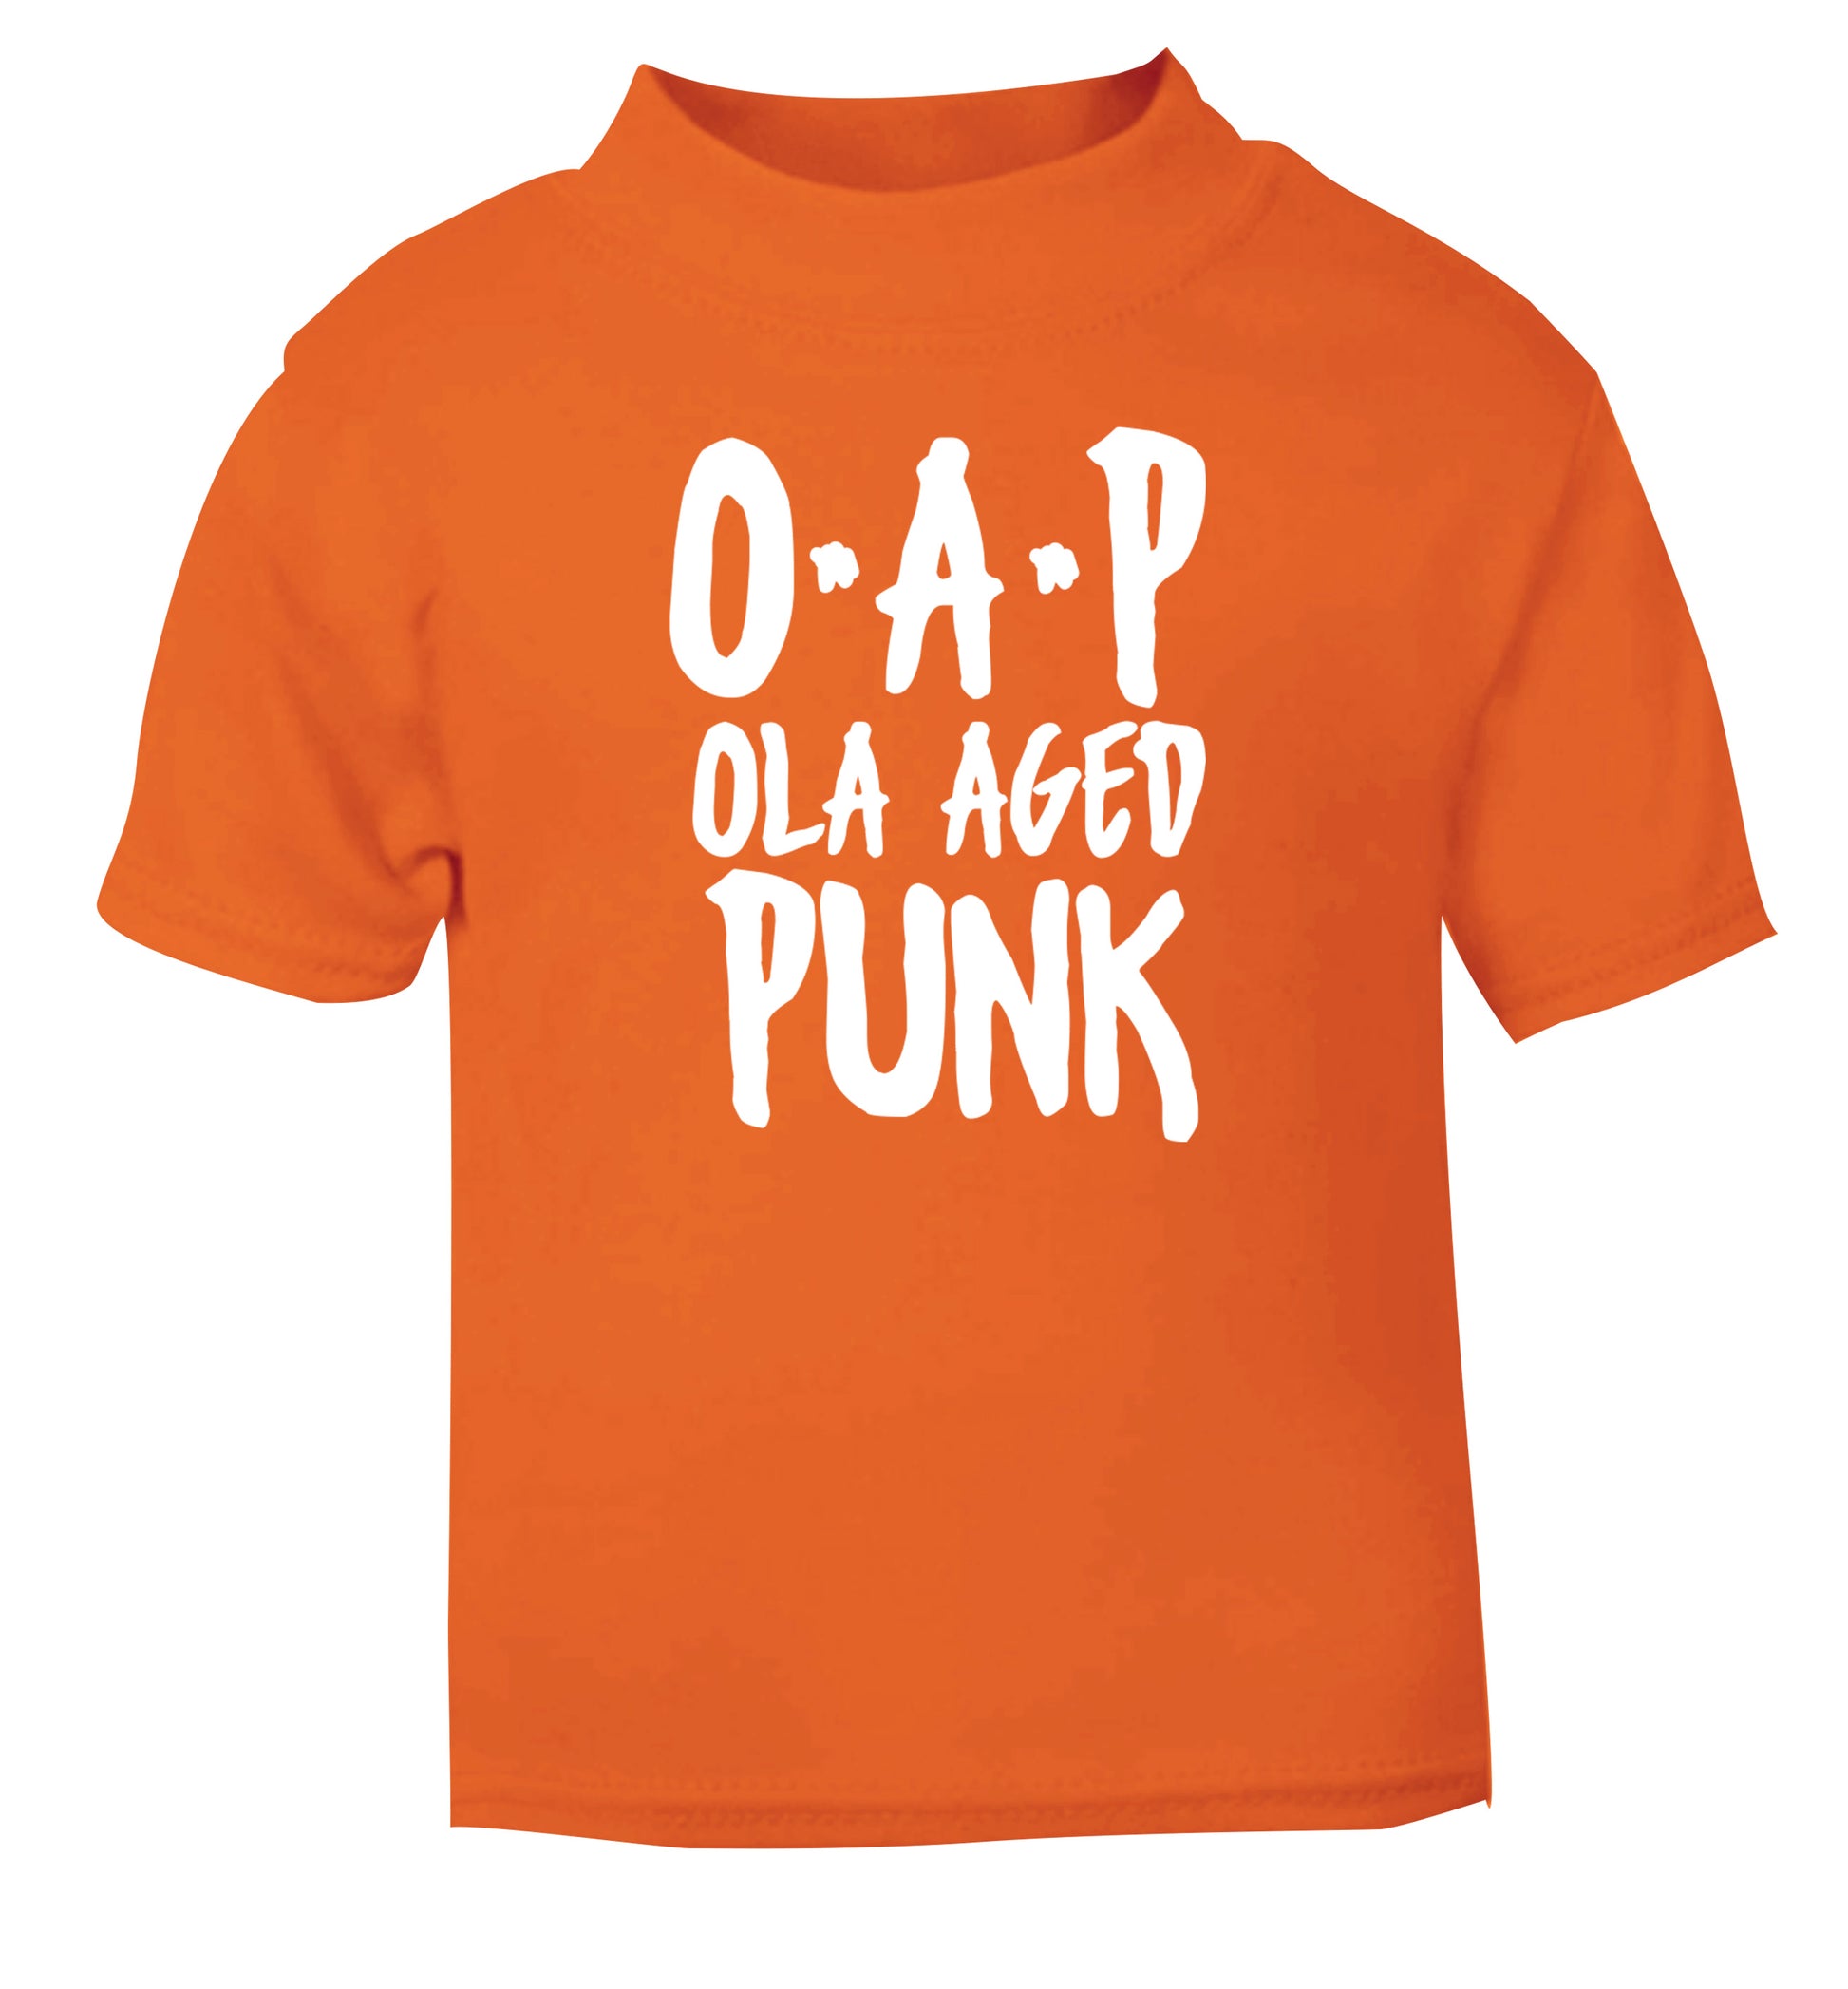 O.A.P Old Aged Punk orange Baby Toddler Tshirt 2 Years